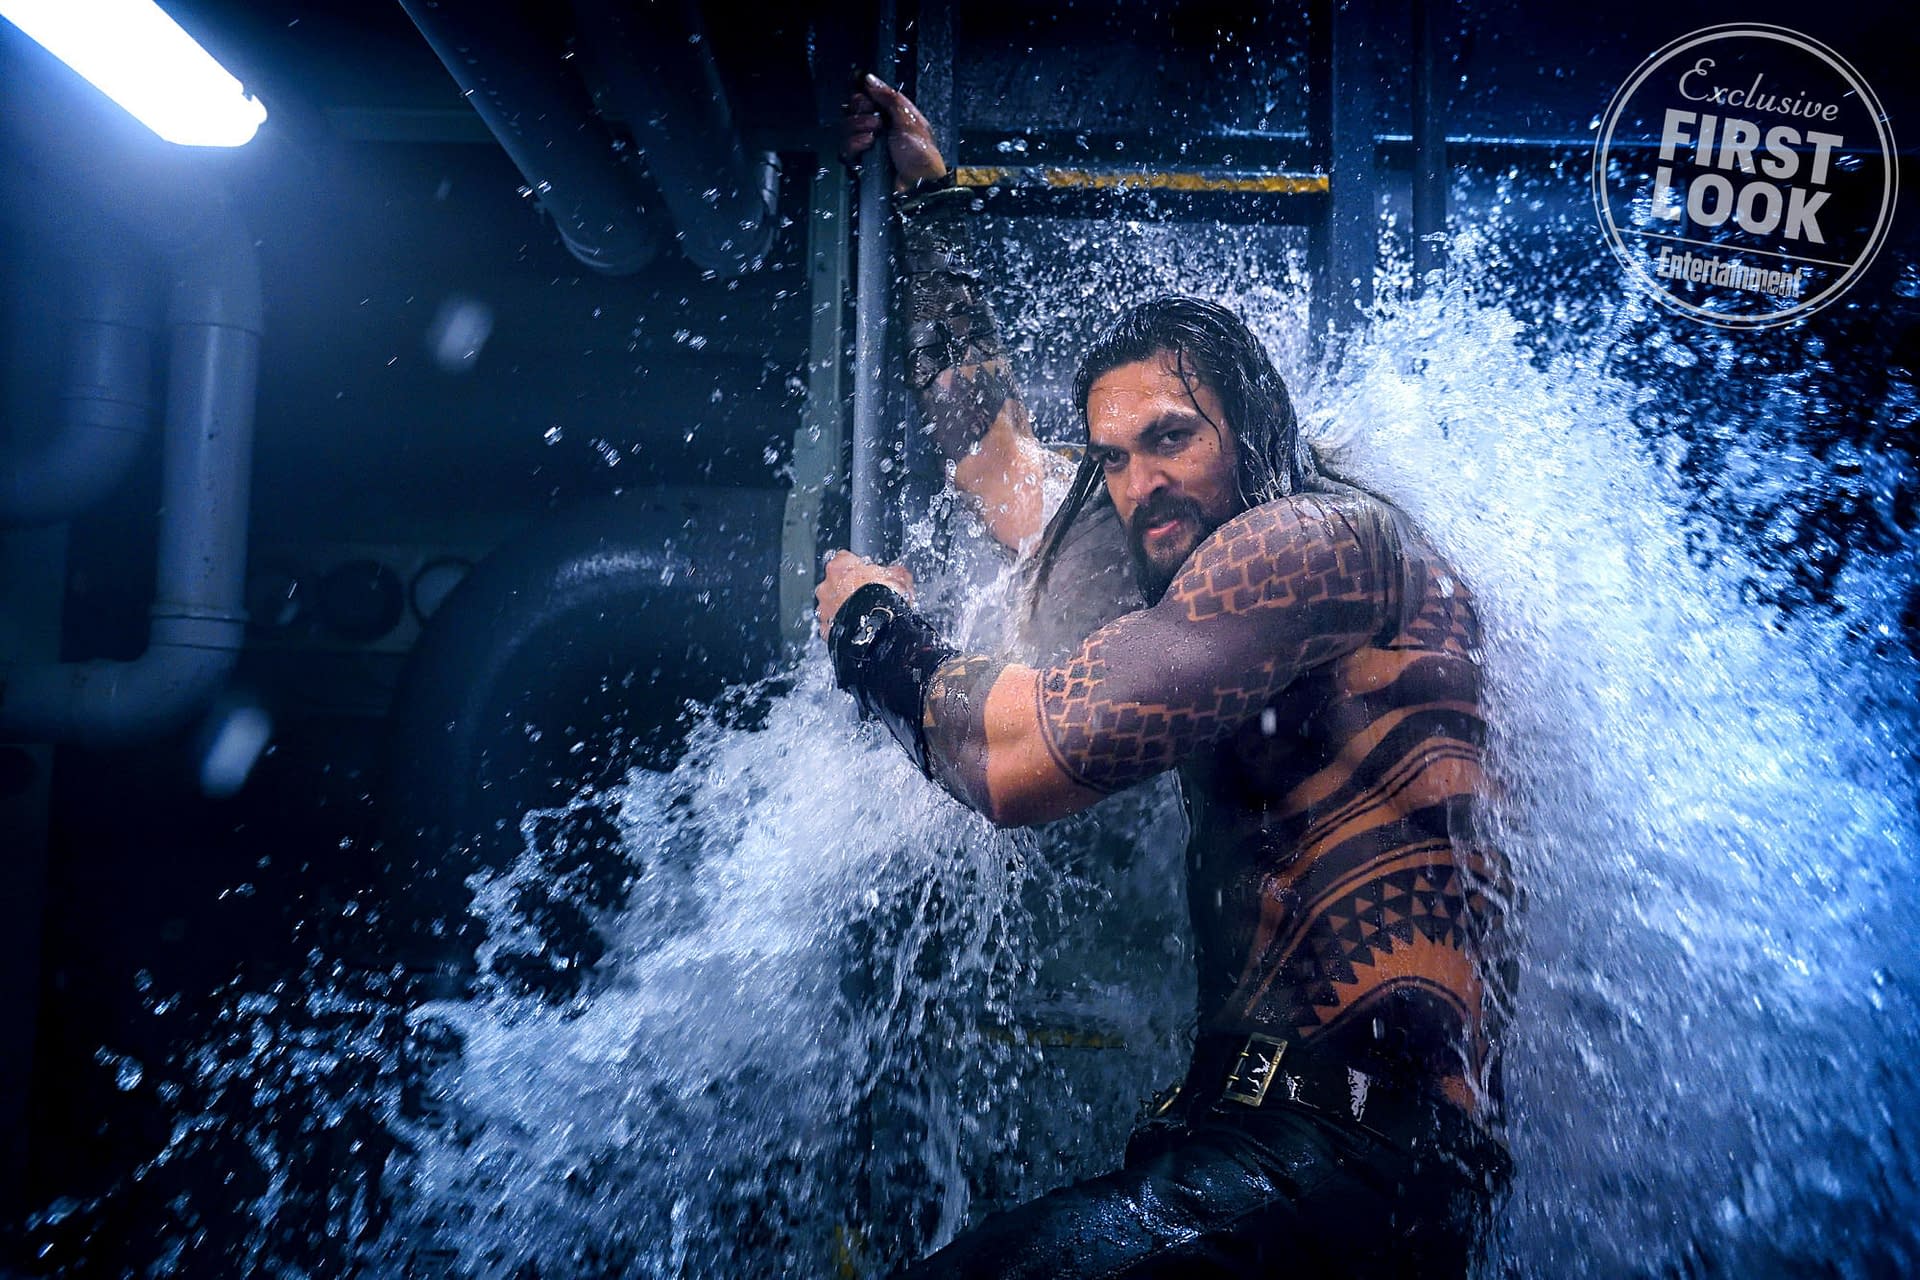 6 New Images from Aquaman, Including a Look at Black Manta